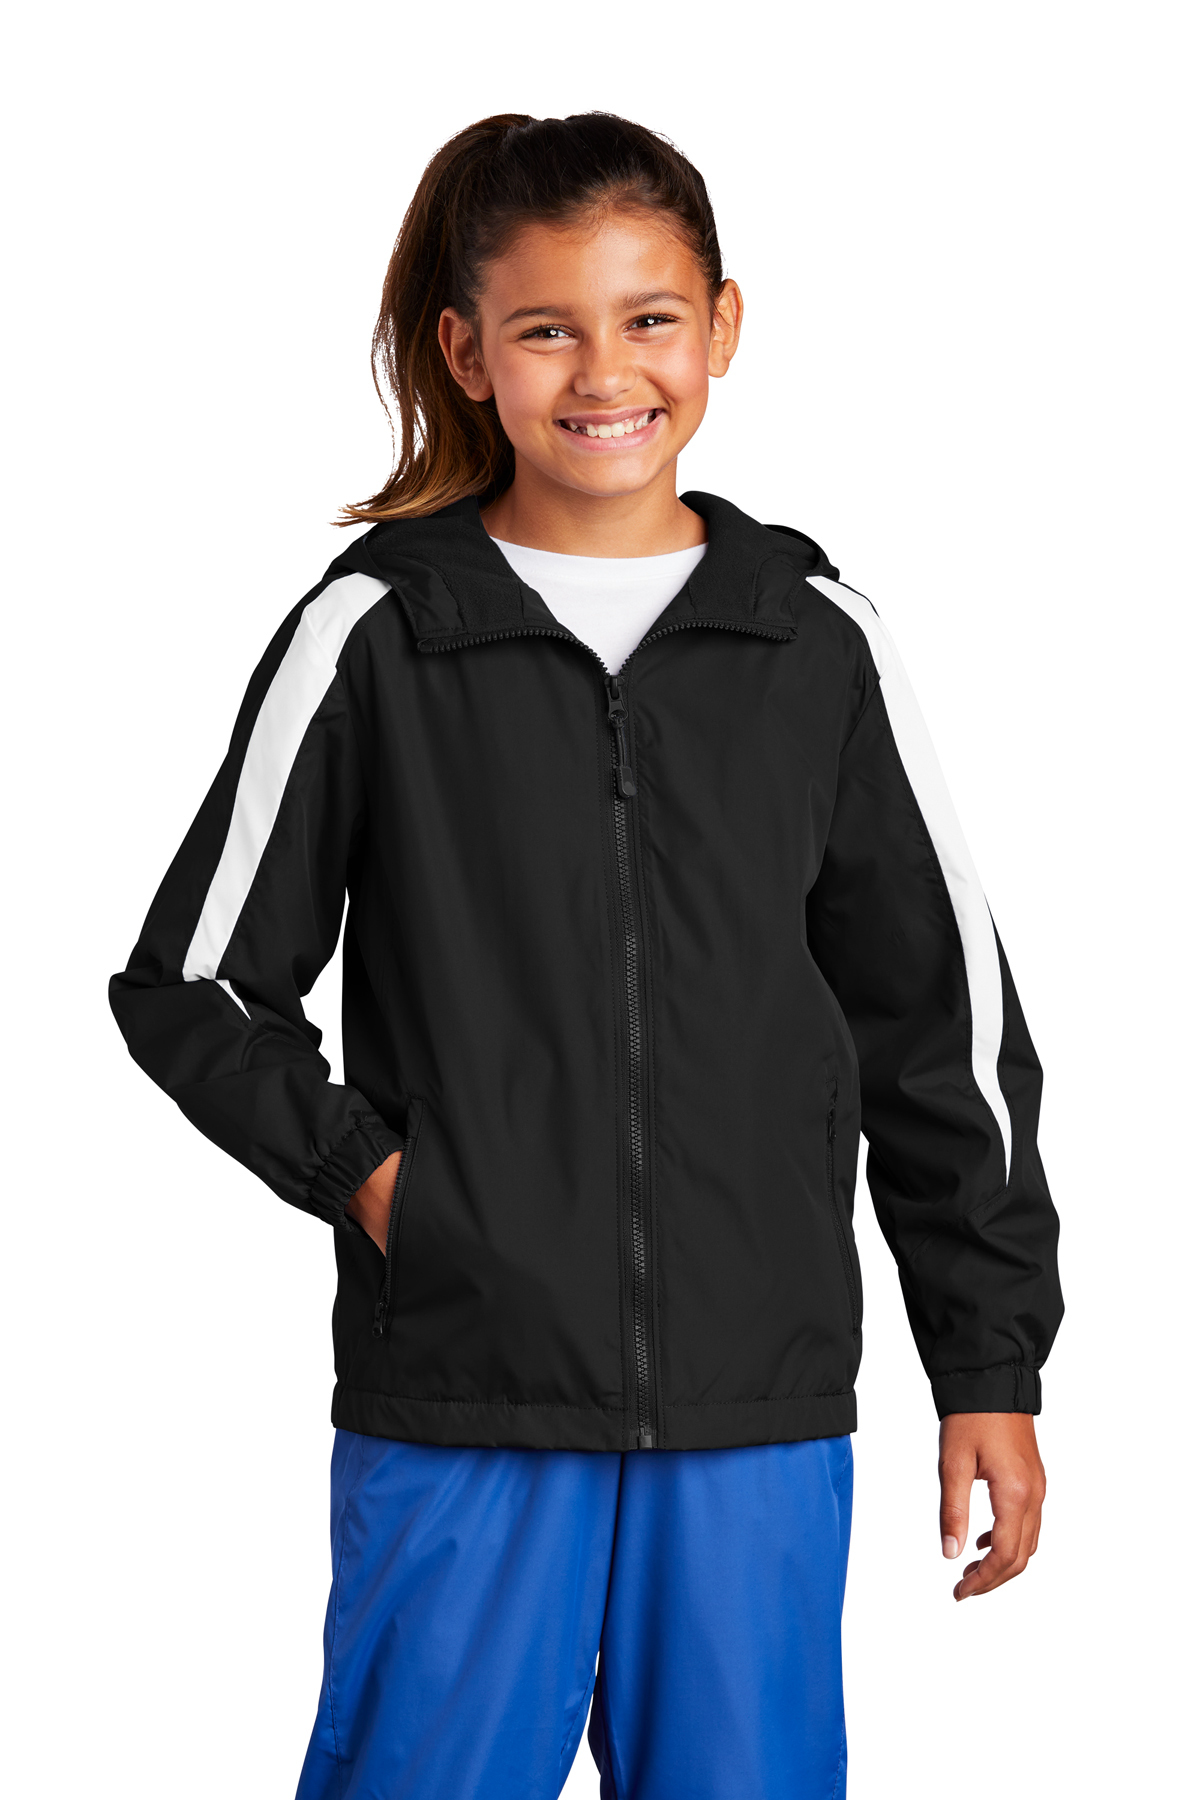 Sport-Tek Youth Fleece-Lined Hooded Colorblock Jacket YST81 Black/White